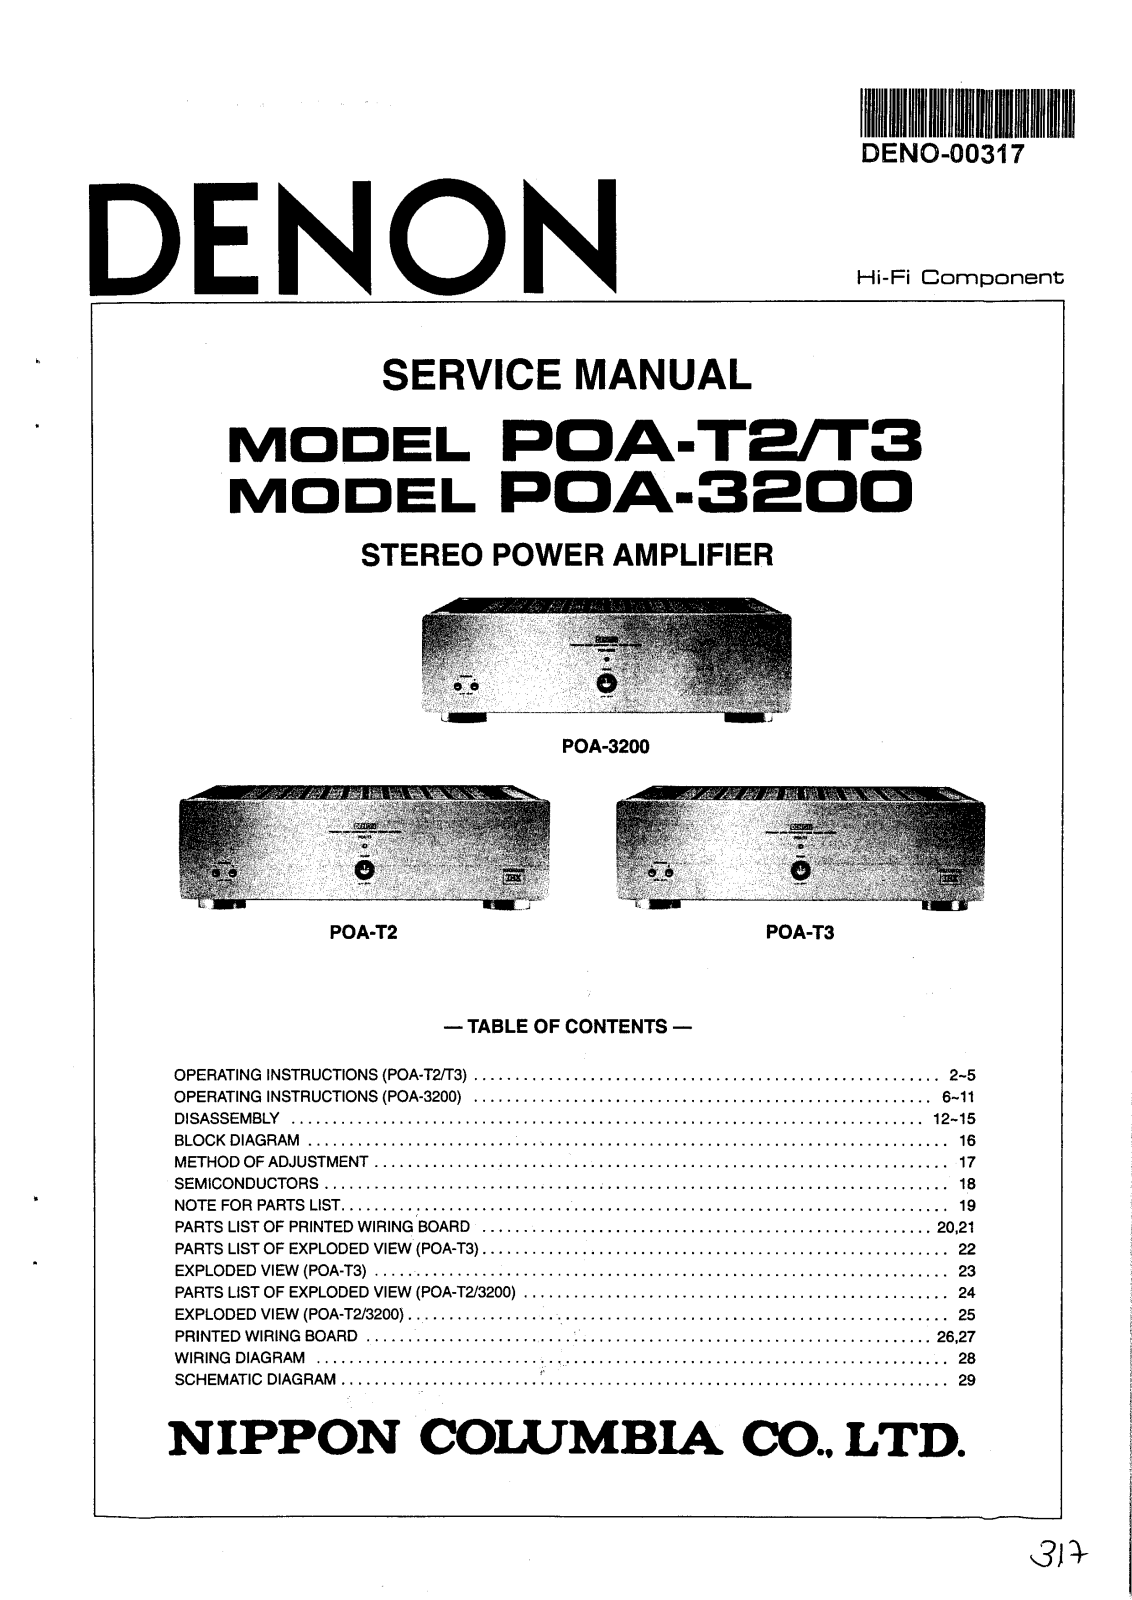 Denon POA-T3, POA-T2 Service Manual